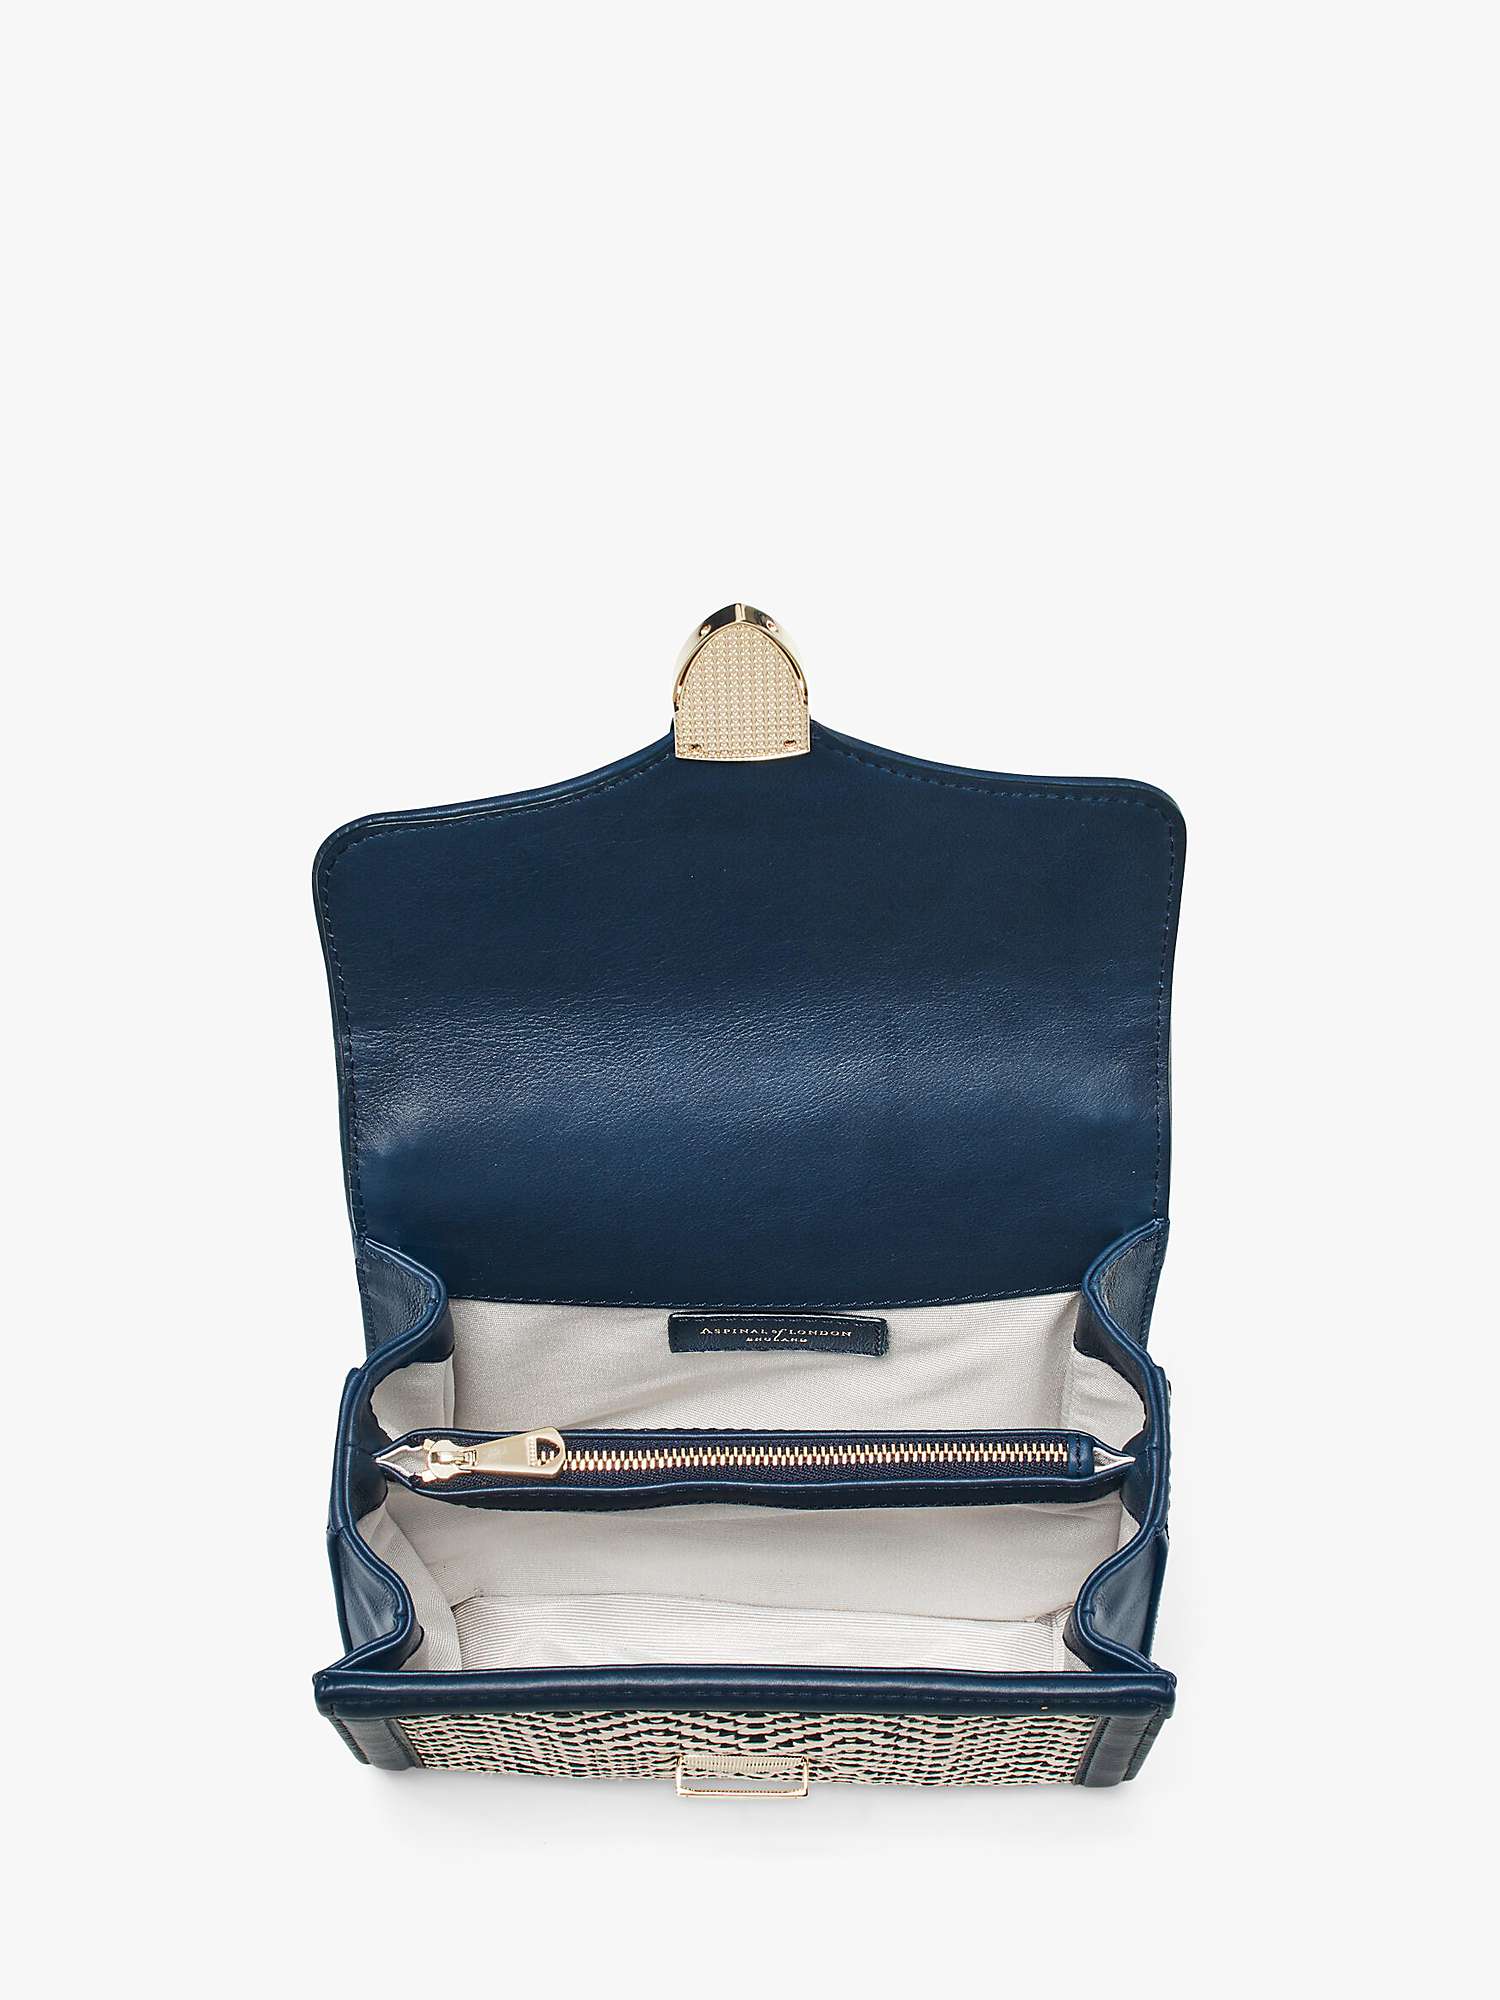 Buy Aspinal of London Mayfair Midi Raffia and Leather Handbag, Navy/Ivory Online at johnlewis.com